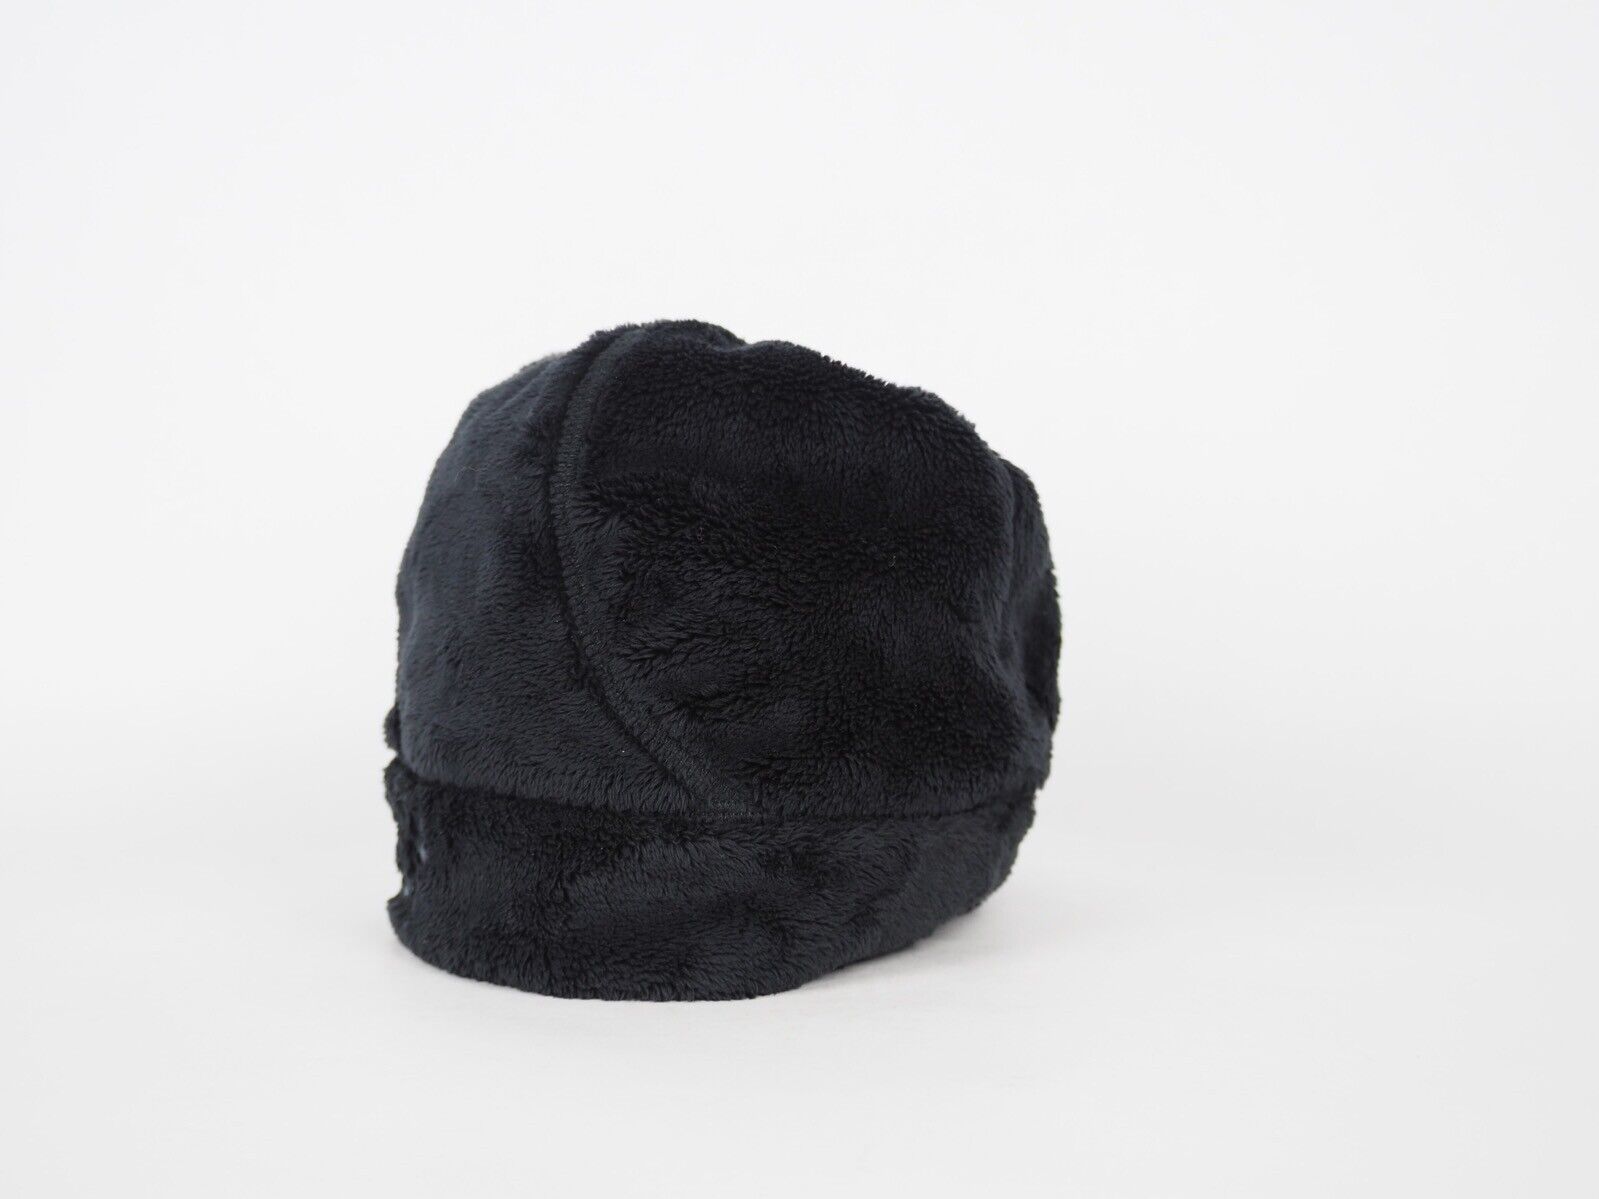 Girls Jack Wolfskin Soft Asylum 1901881 Black Furry Beanie Hat - London Top Style